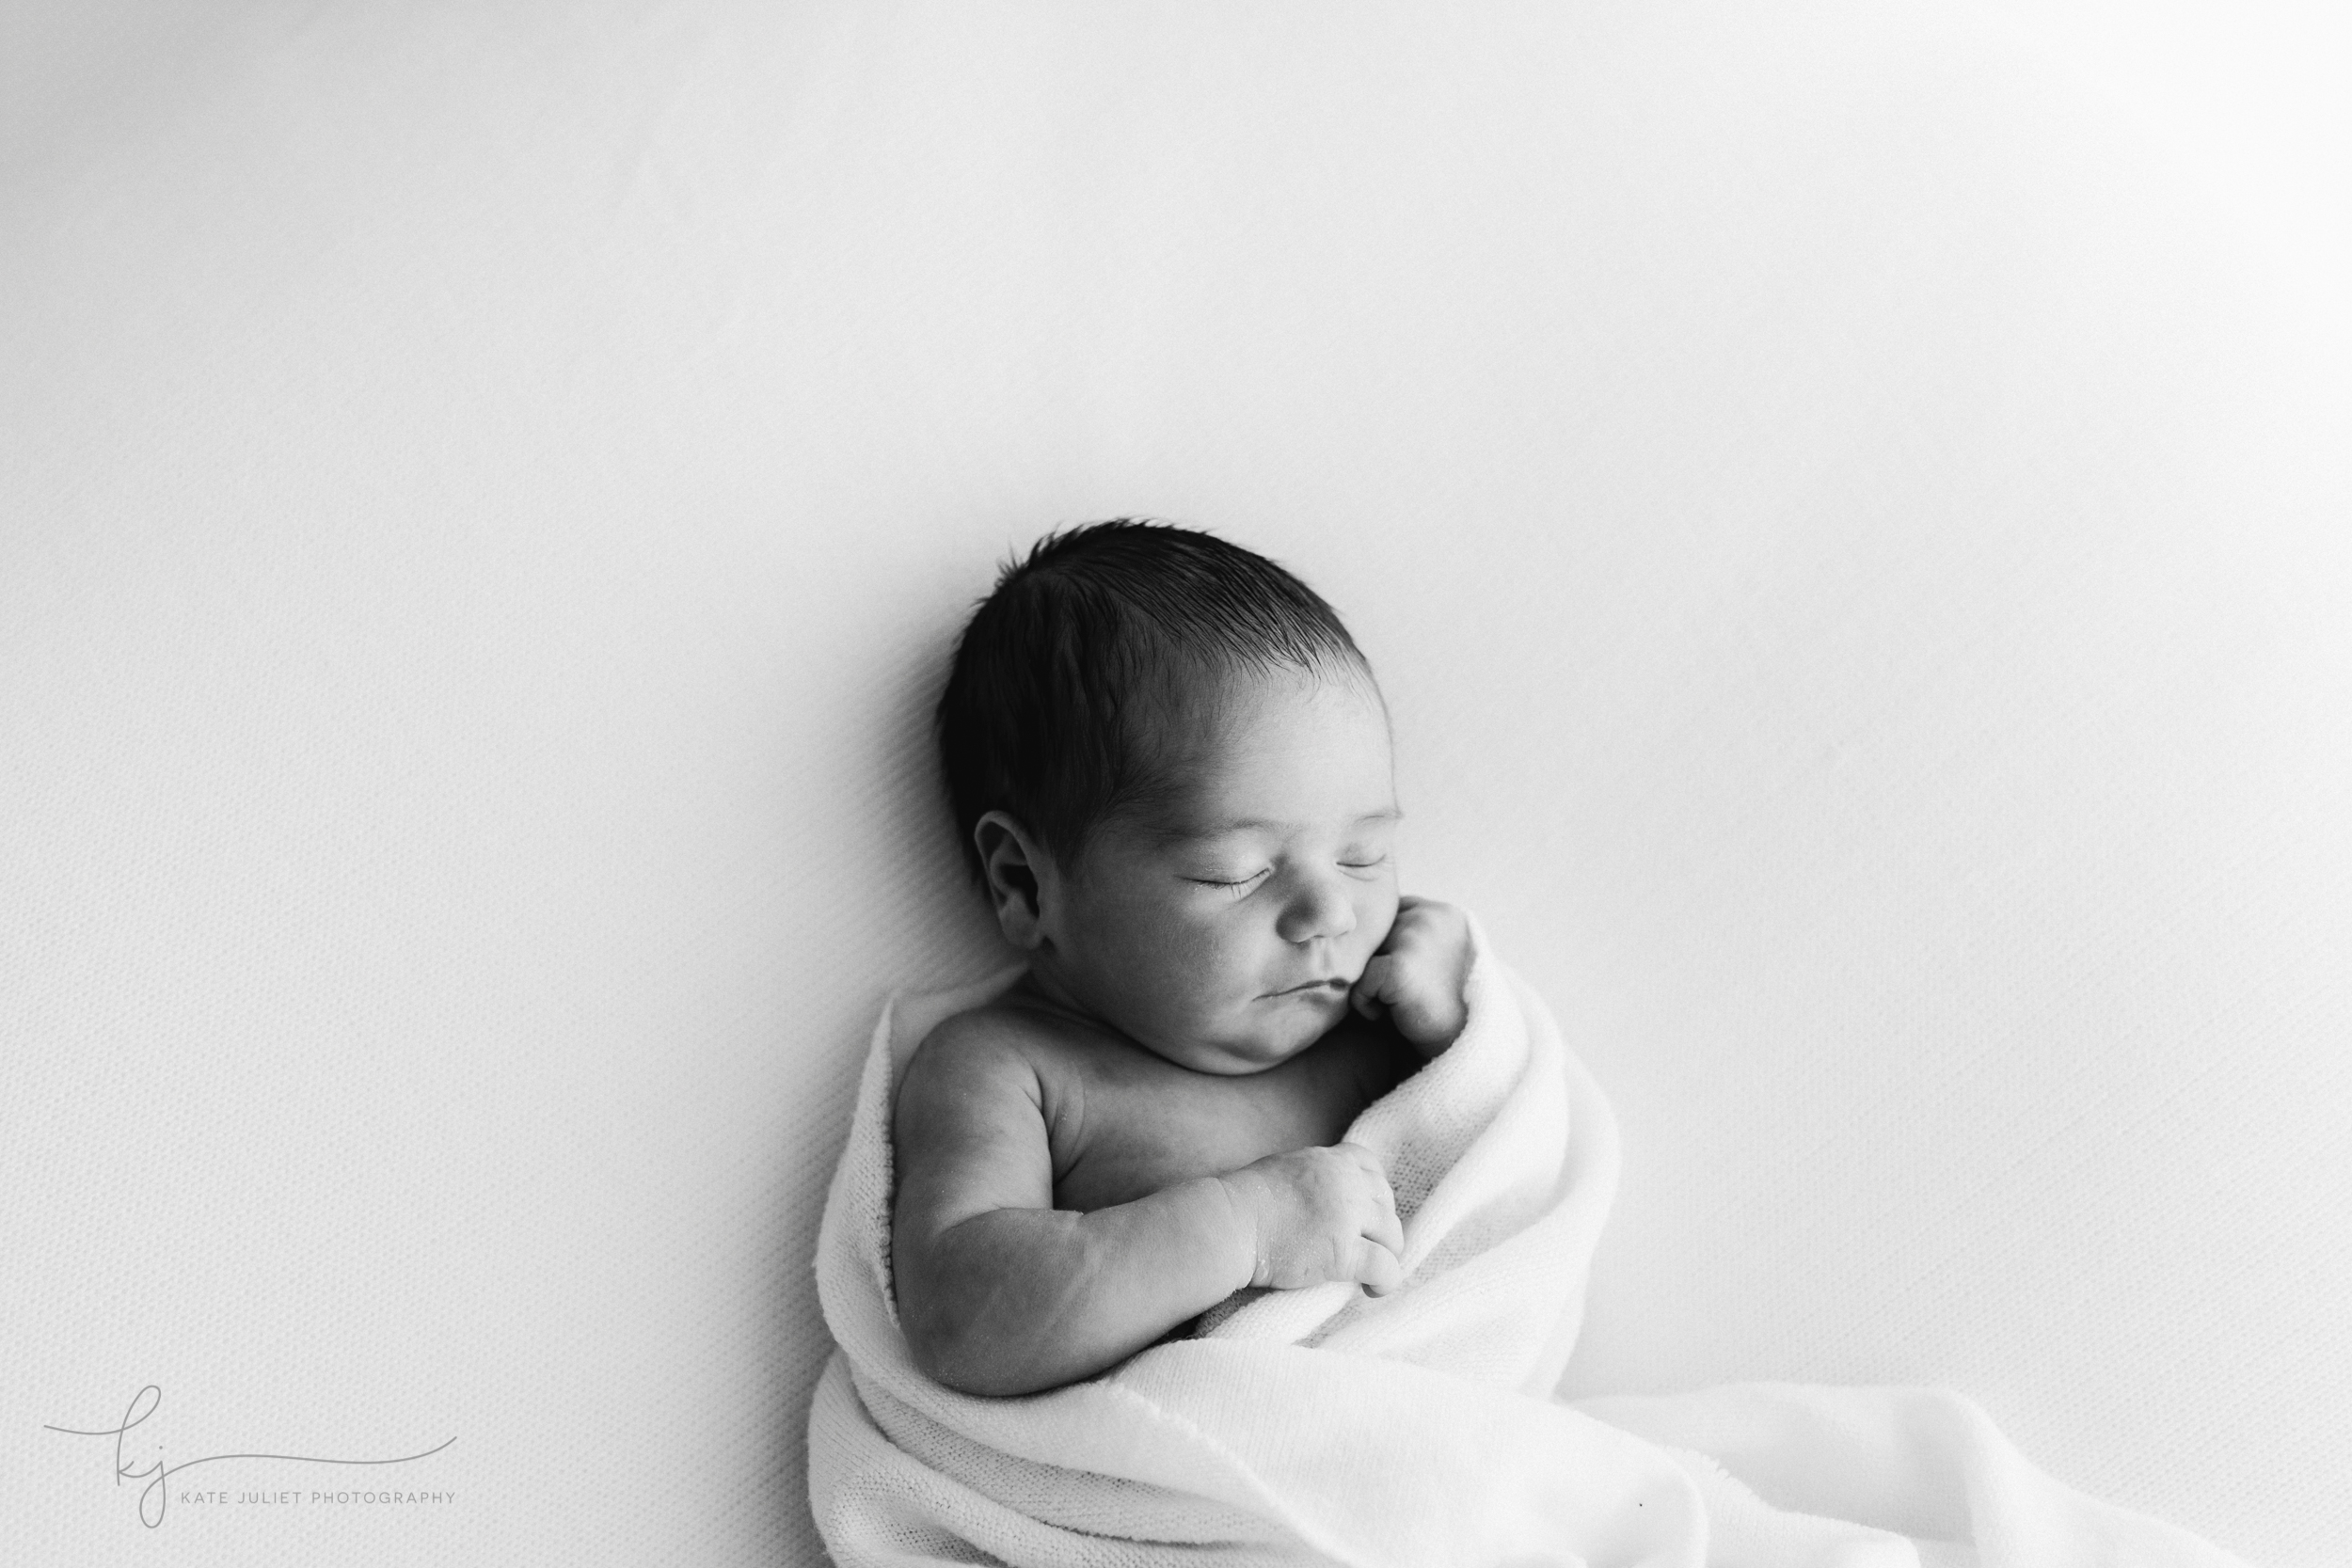 kate_juliet_photography_newborn_web-2 (1).jpg